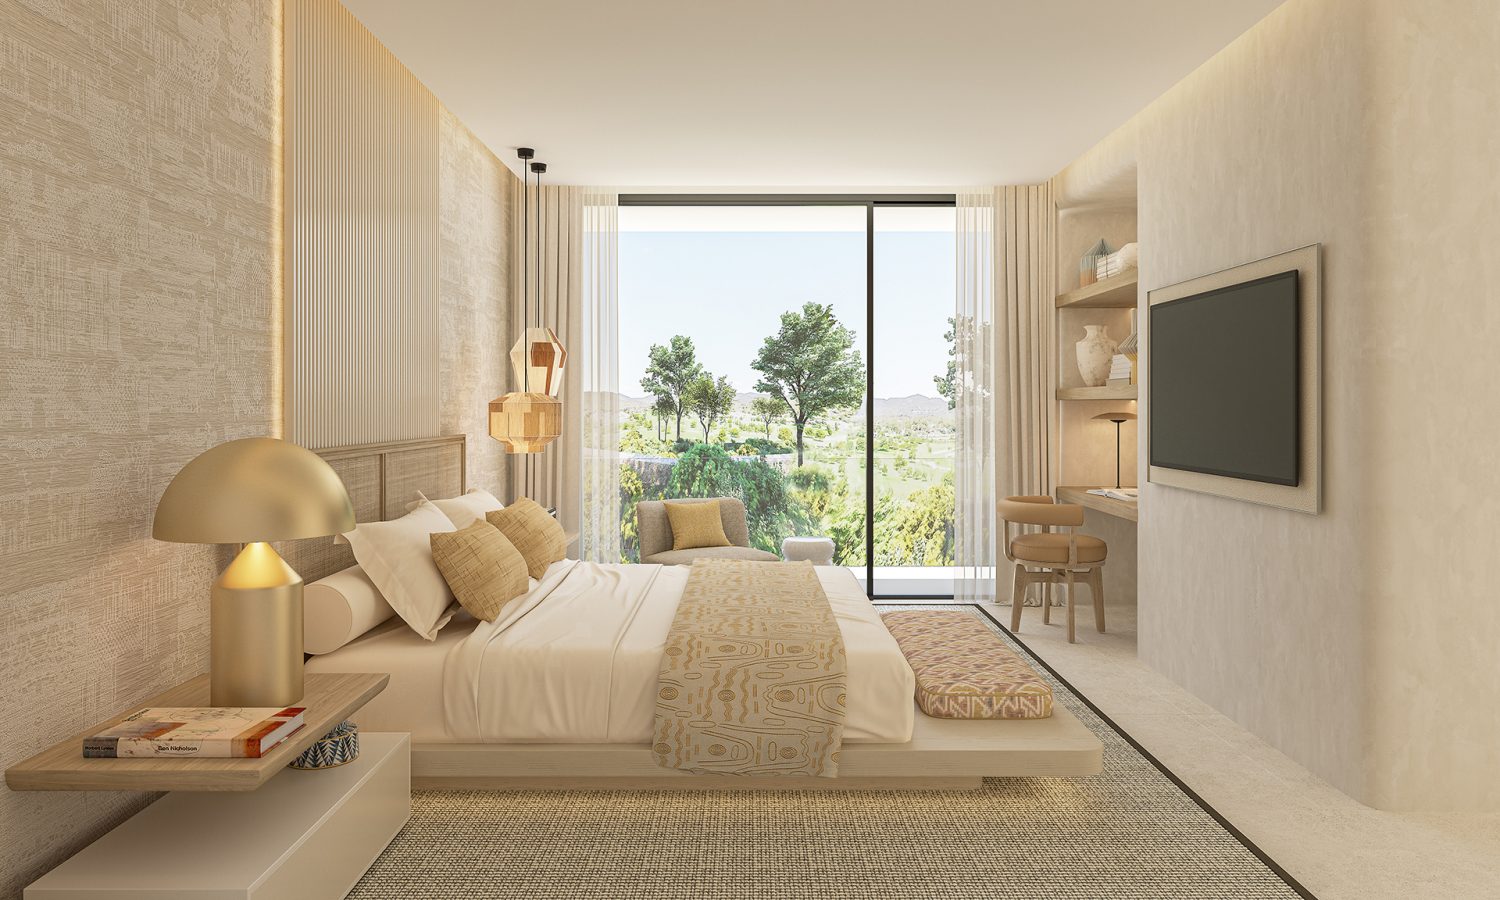 Project of 20 luxury villas in Roca Llisa near the golf of Ibiza